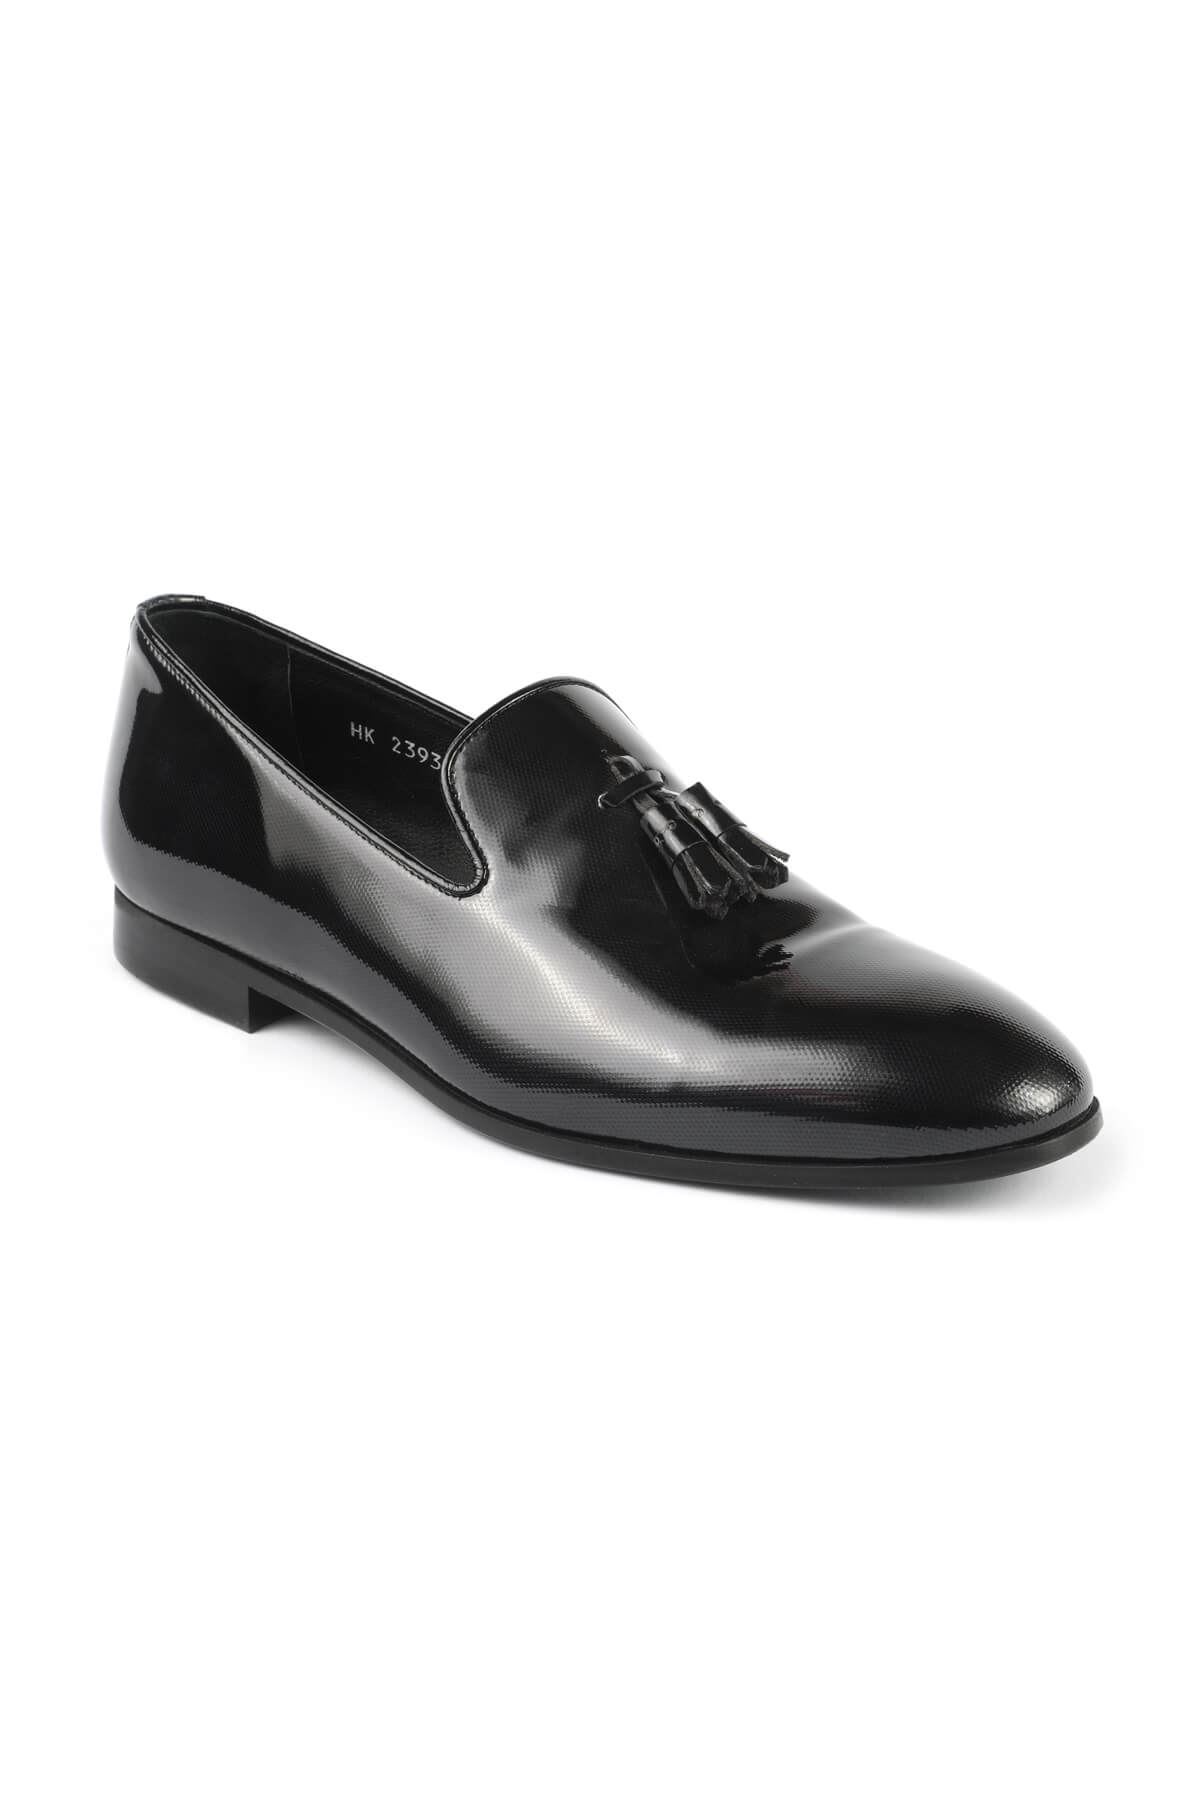 Libero 2393 Black Classic Shoes